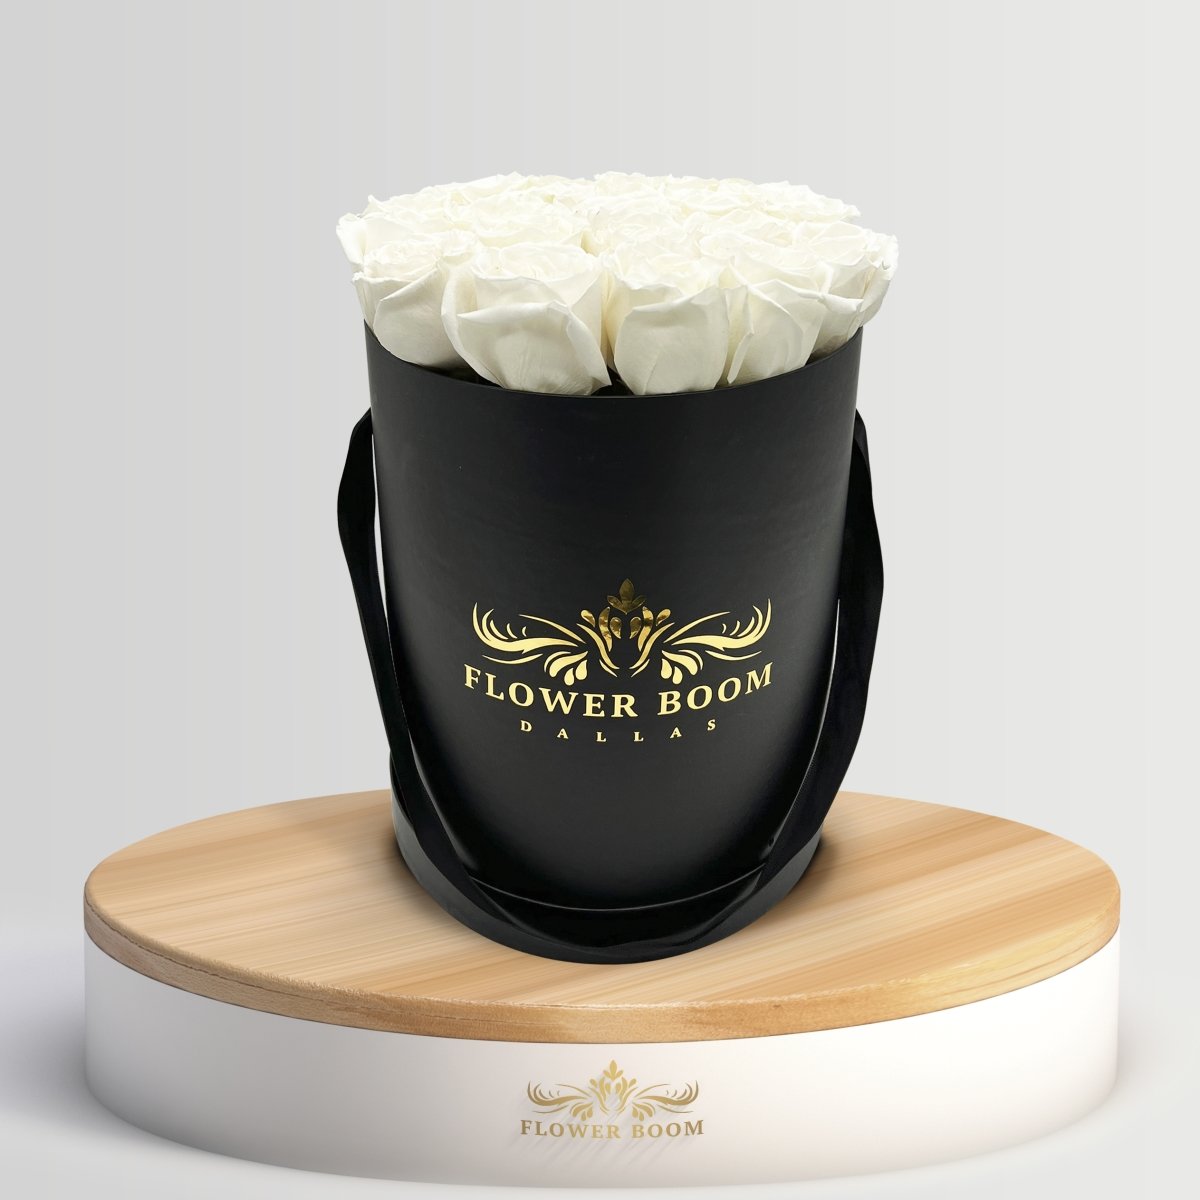 Classic White Roses In A Box - Flower Boom Dallas